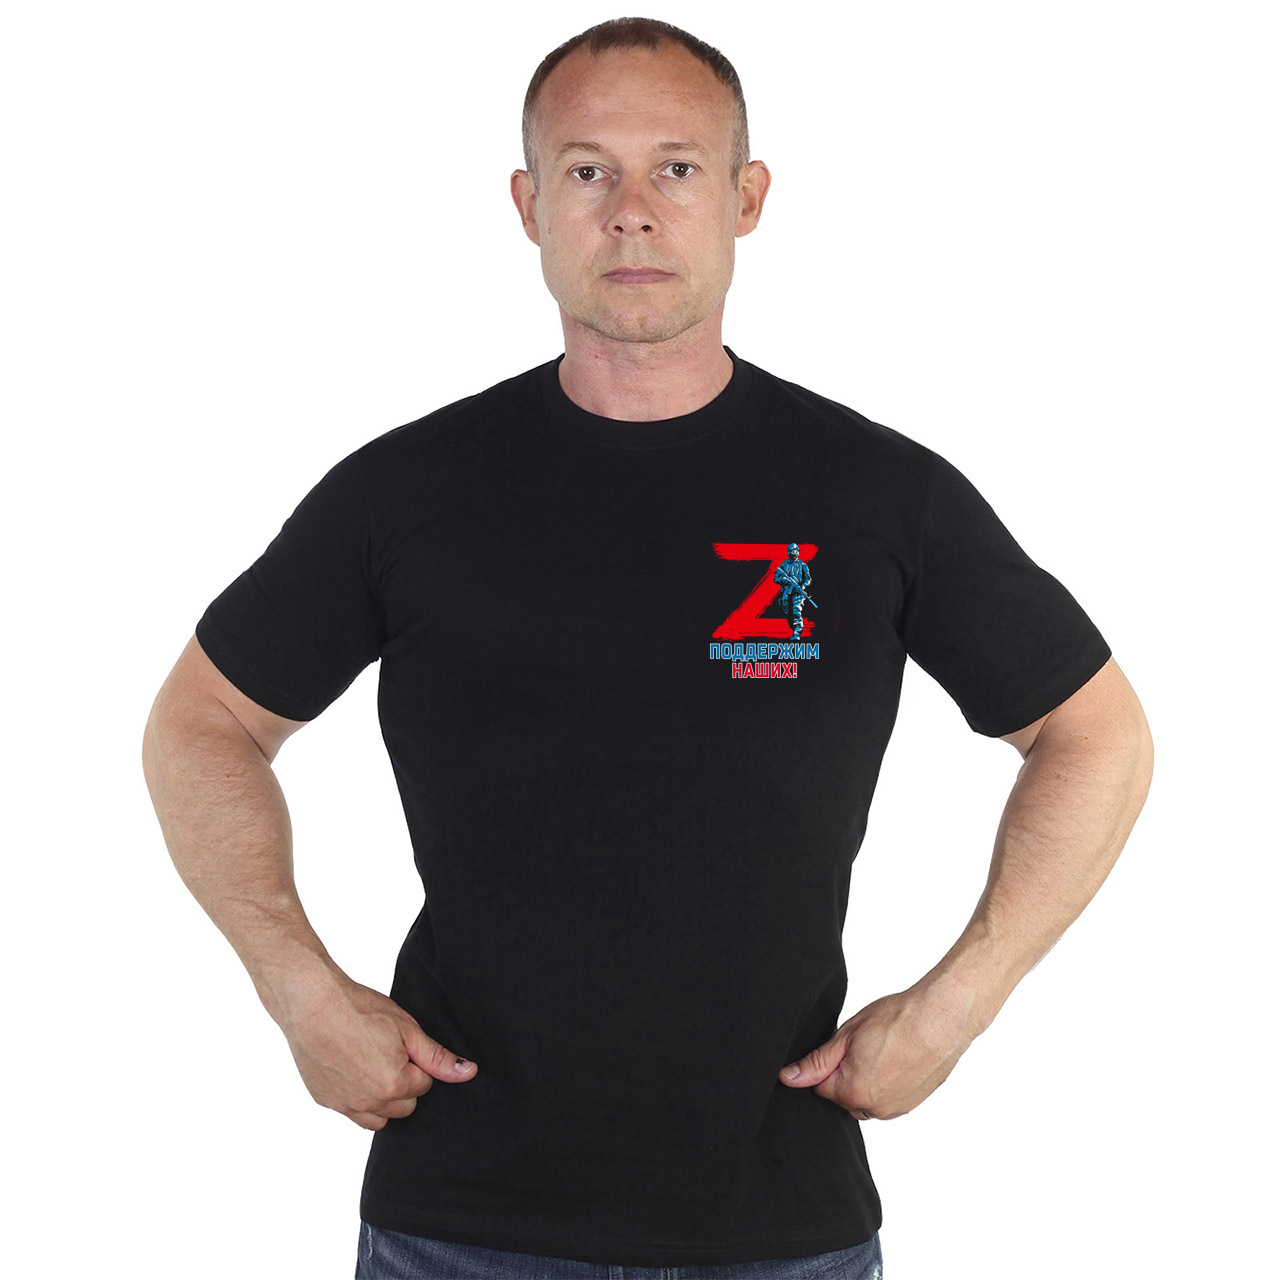 Черная мужская футболка Z